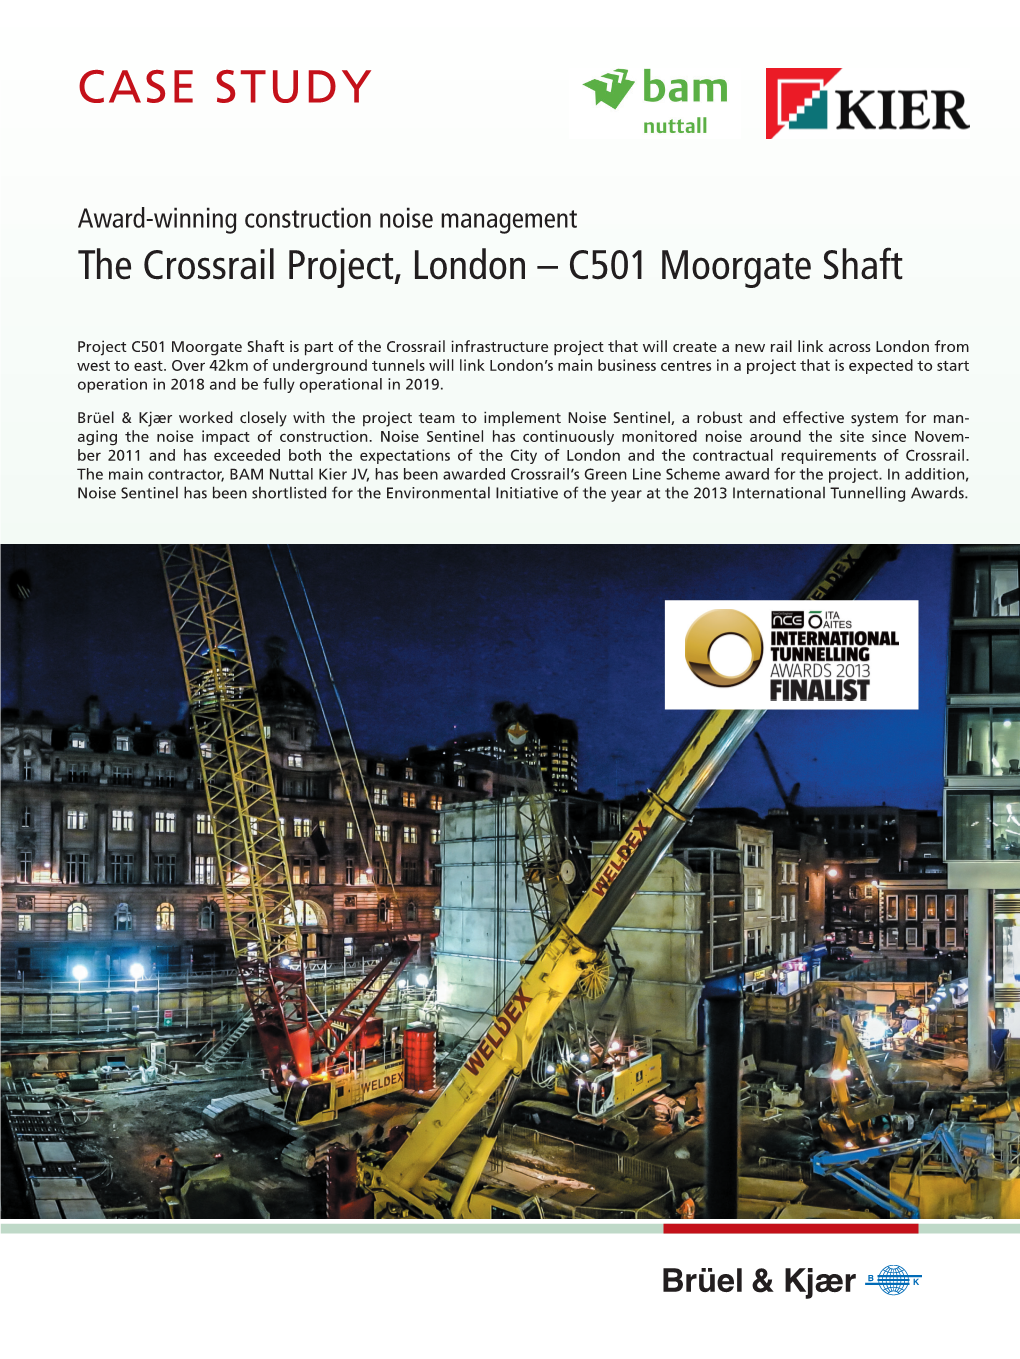 The Crossrail Project, London – C501 Moorgate Shaft